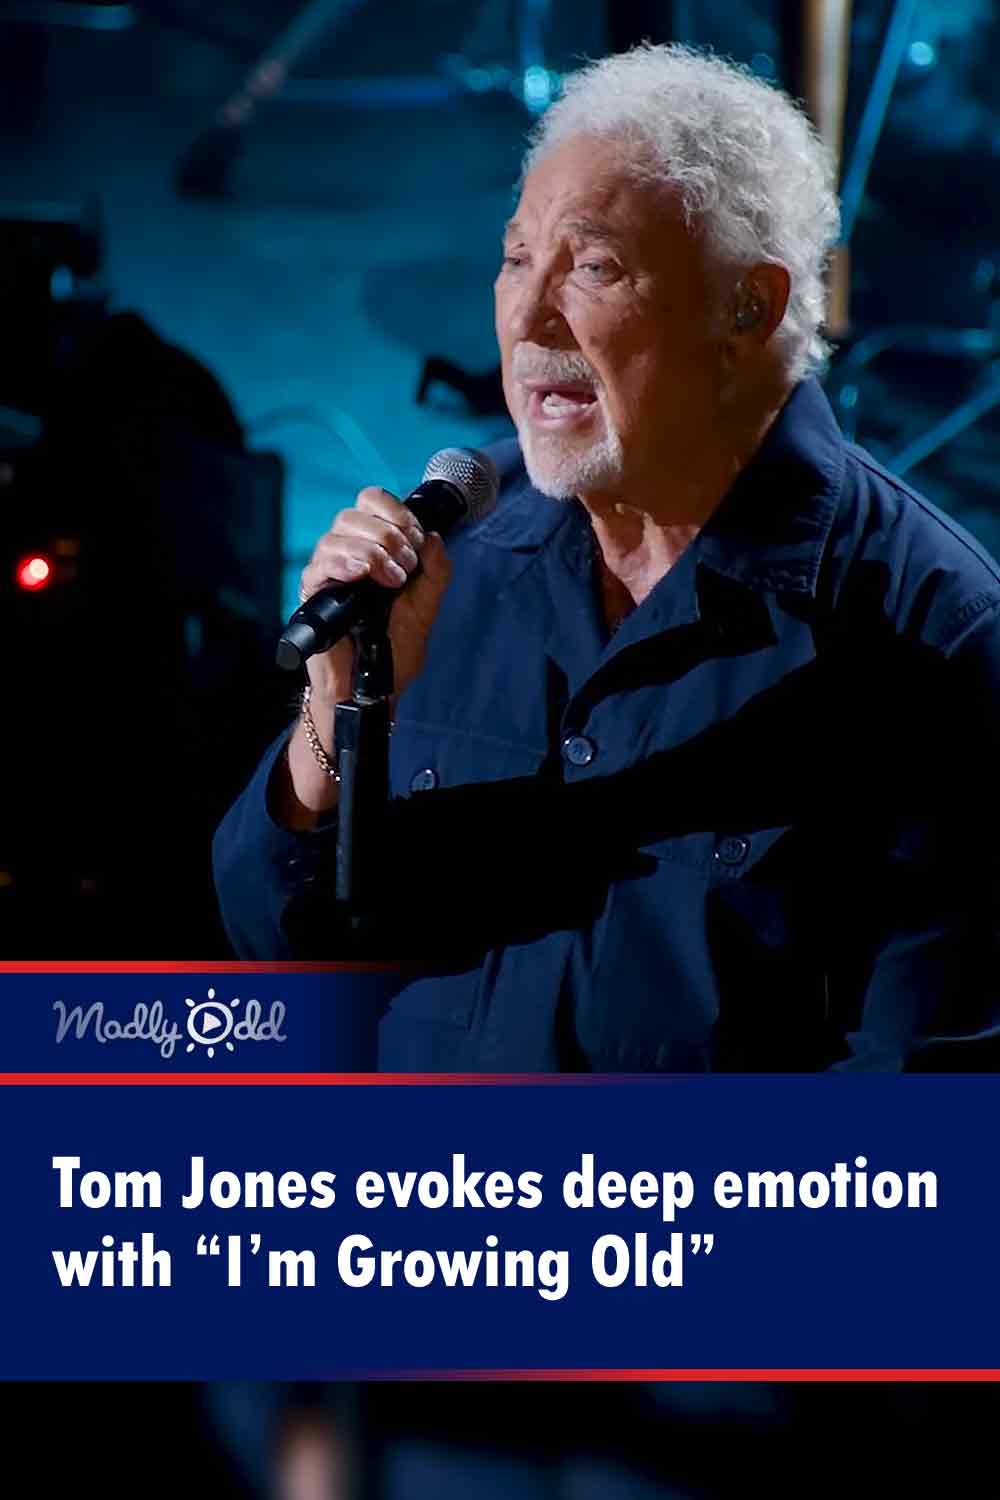 Tom Jones evokes deep emotion with “I’m Growing Old”